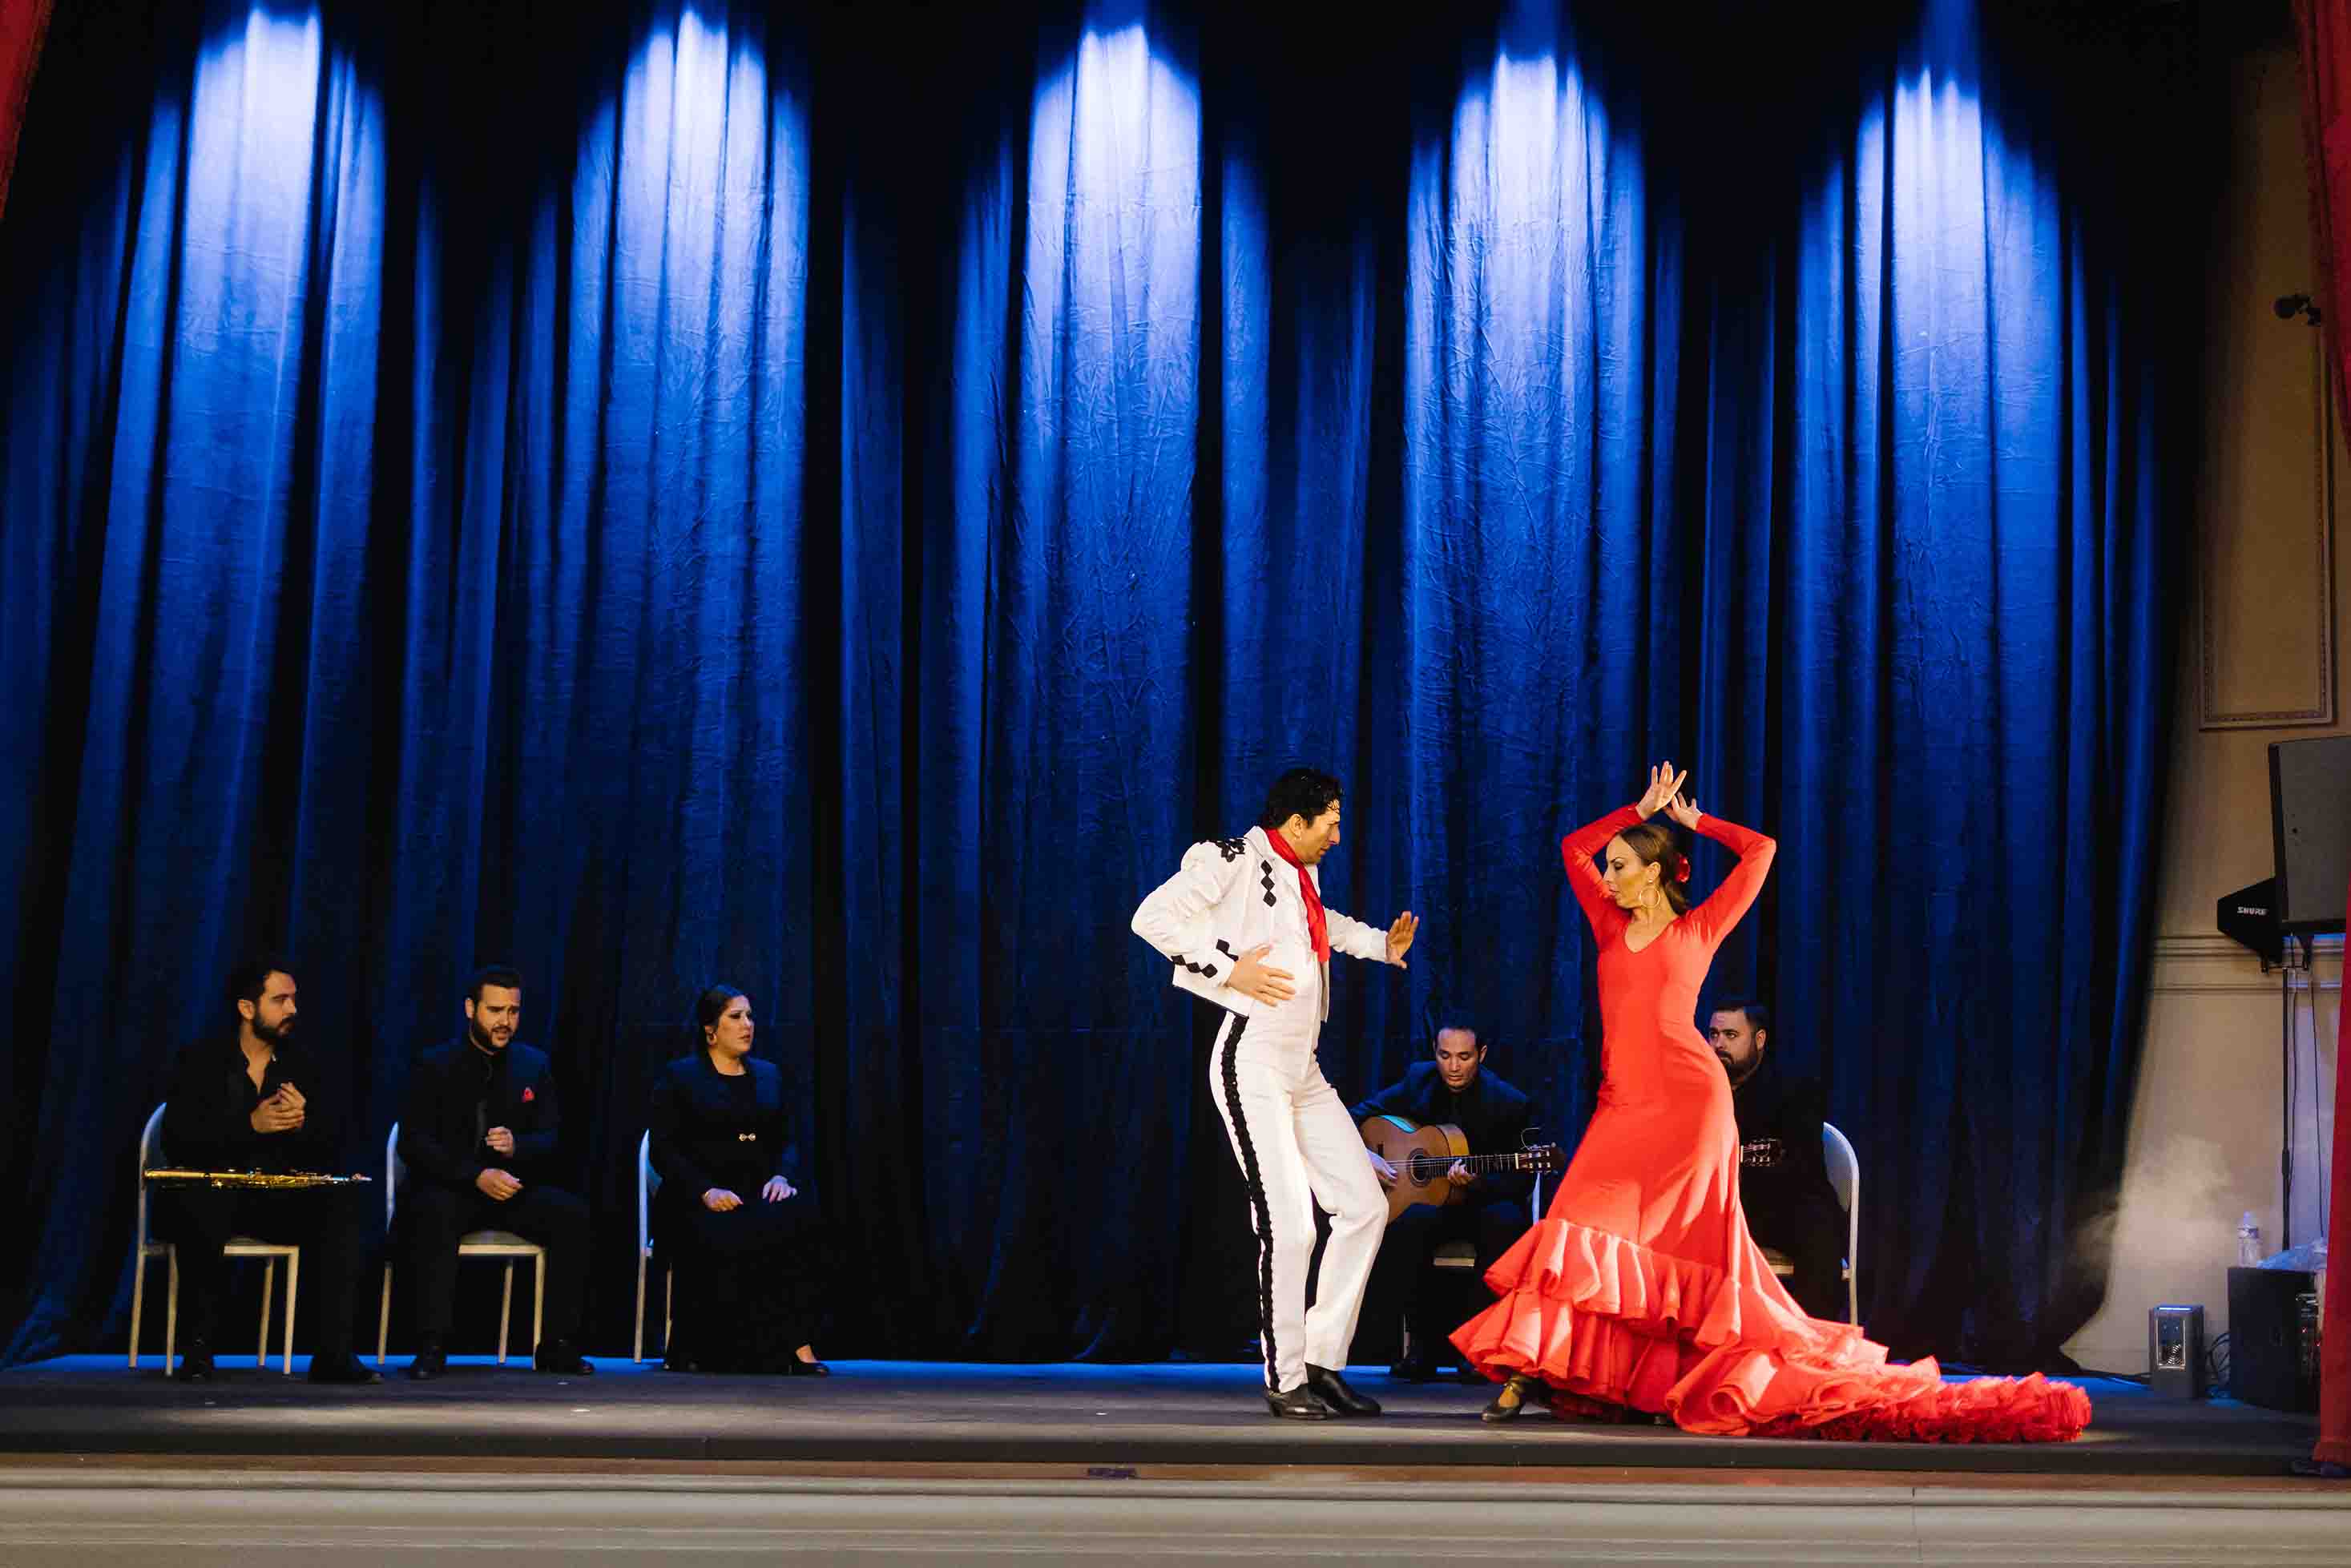 info-1 - Authentic Flamenco Ottawa: A Traditional Spanish Show